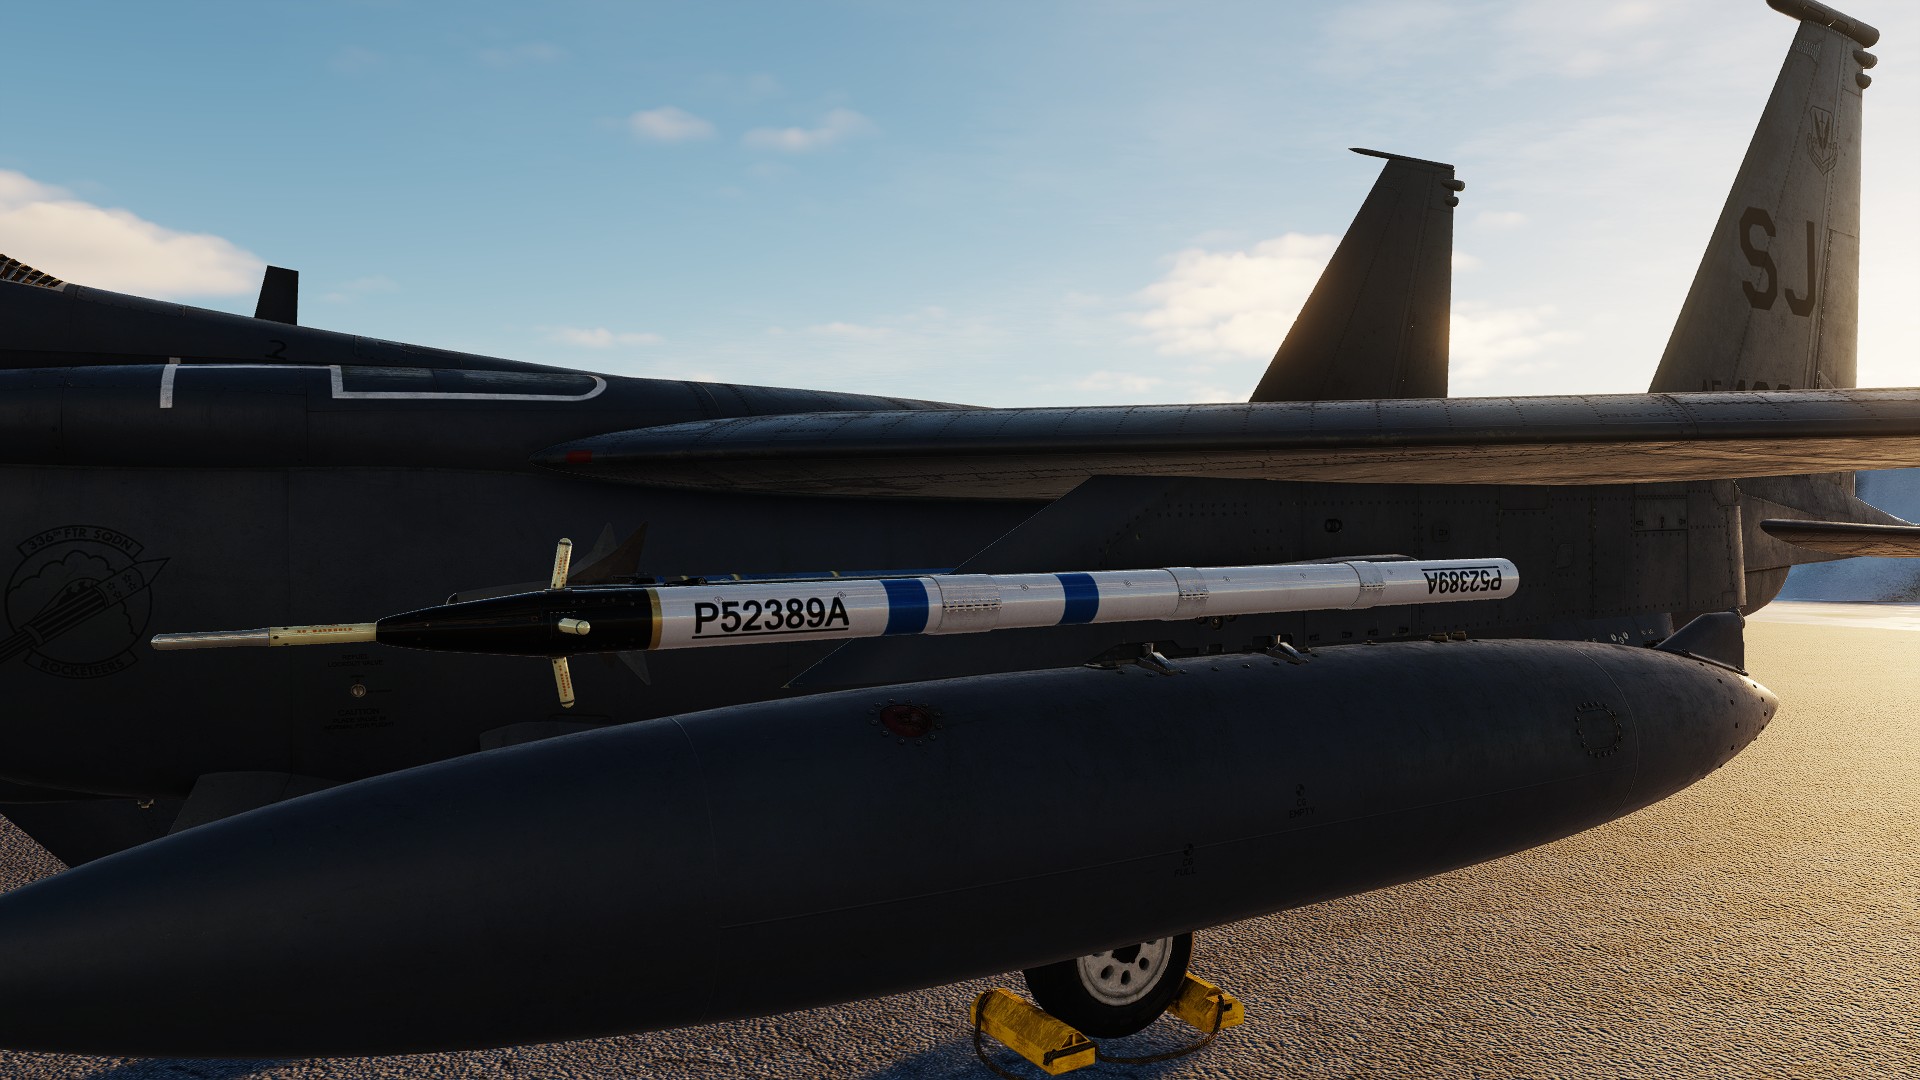 Melty's ACMI Pod mod for the F-15E